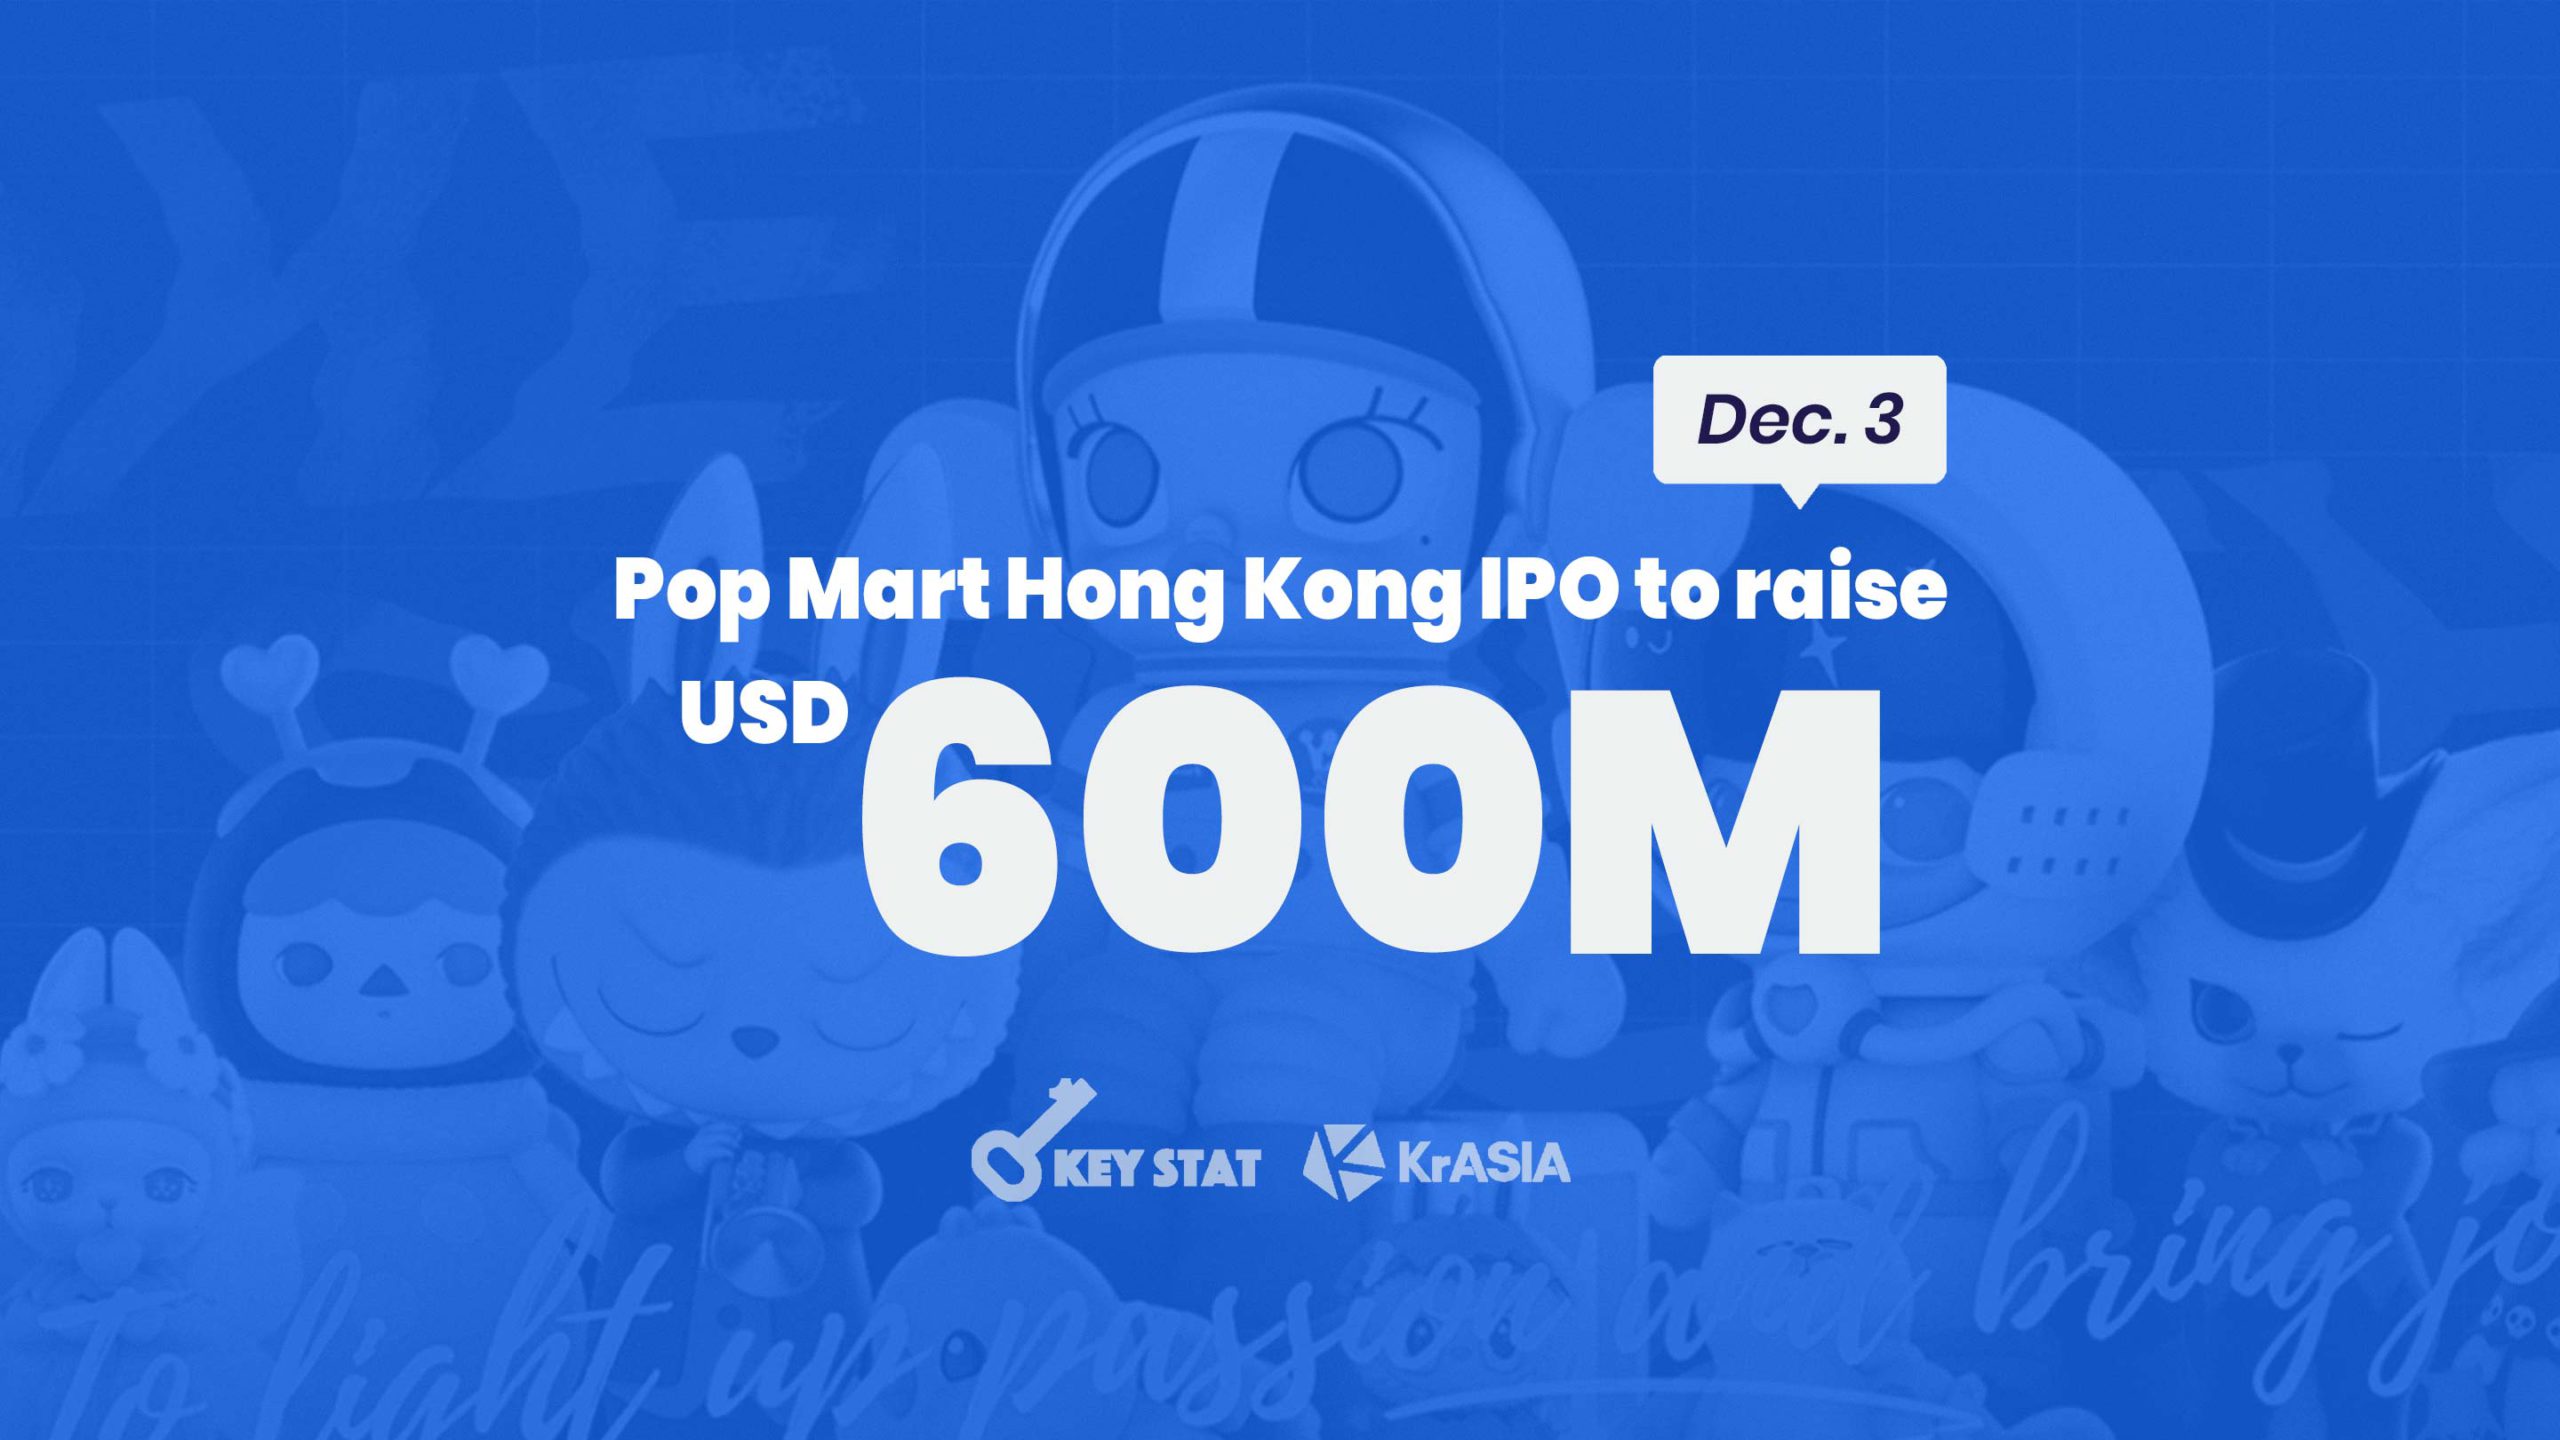 KEY STAT | Toy maker Pop Mart sees huge demand for USD 600 million Hong Kong IPO